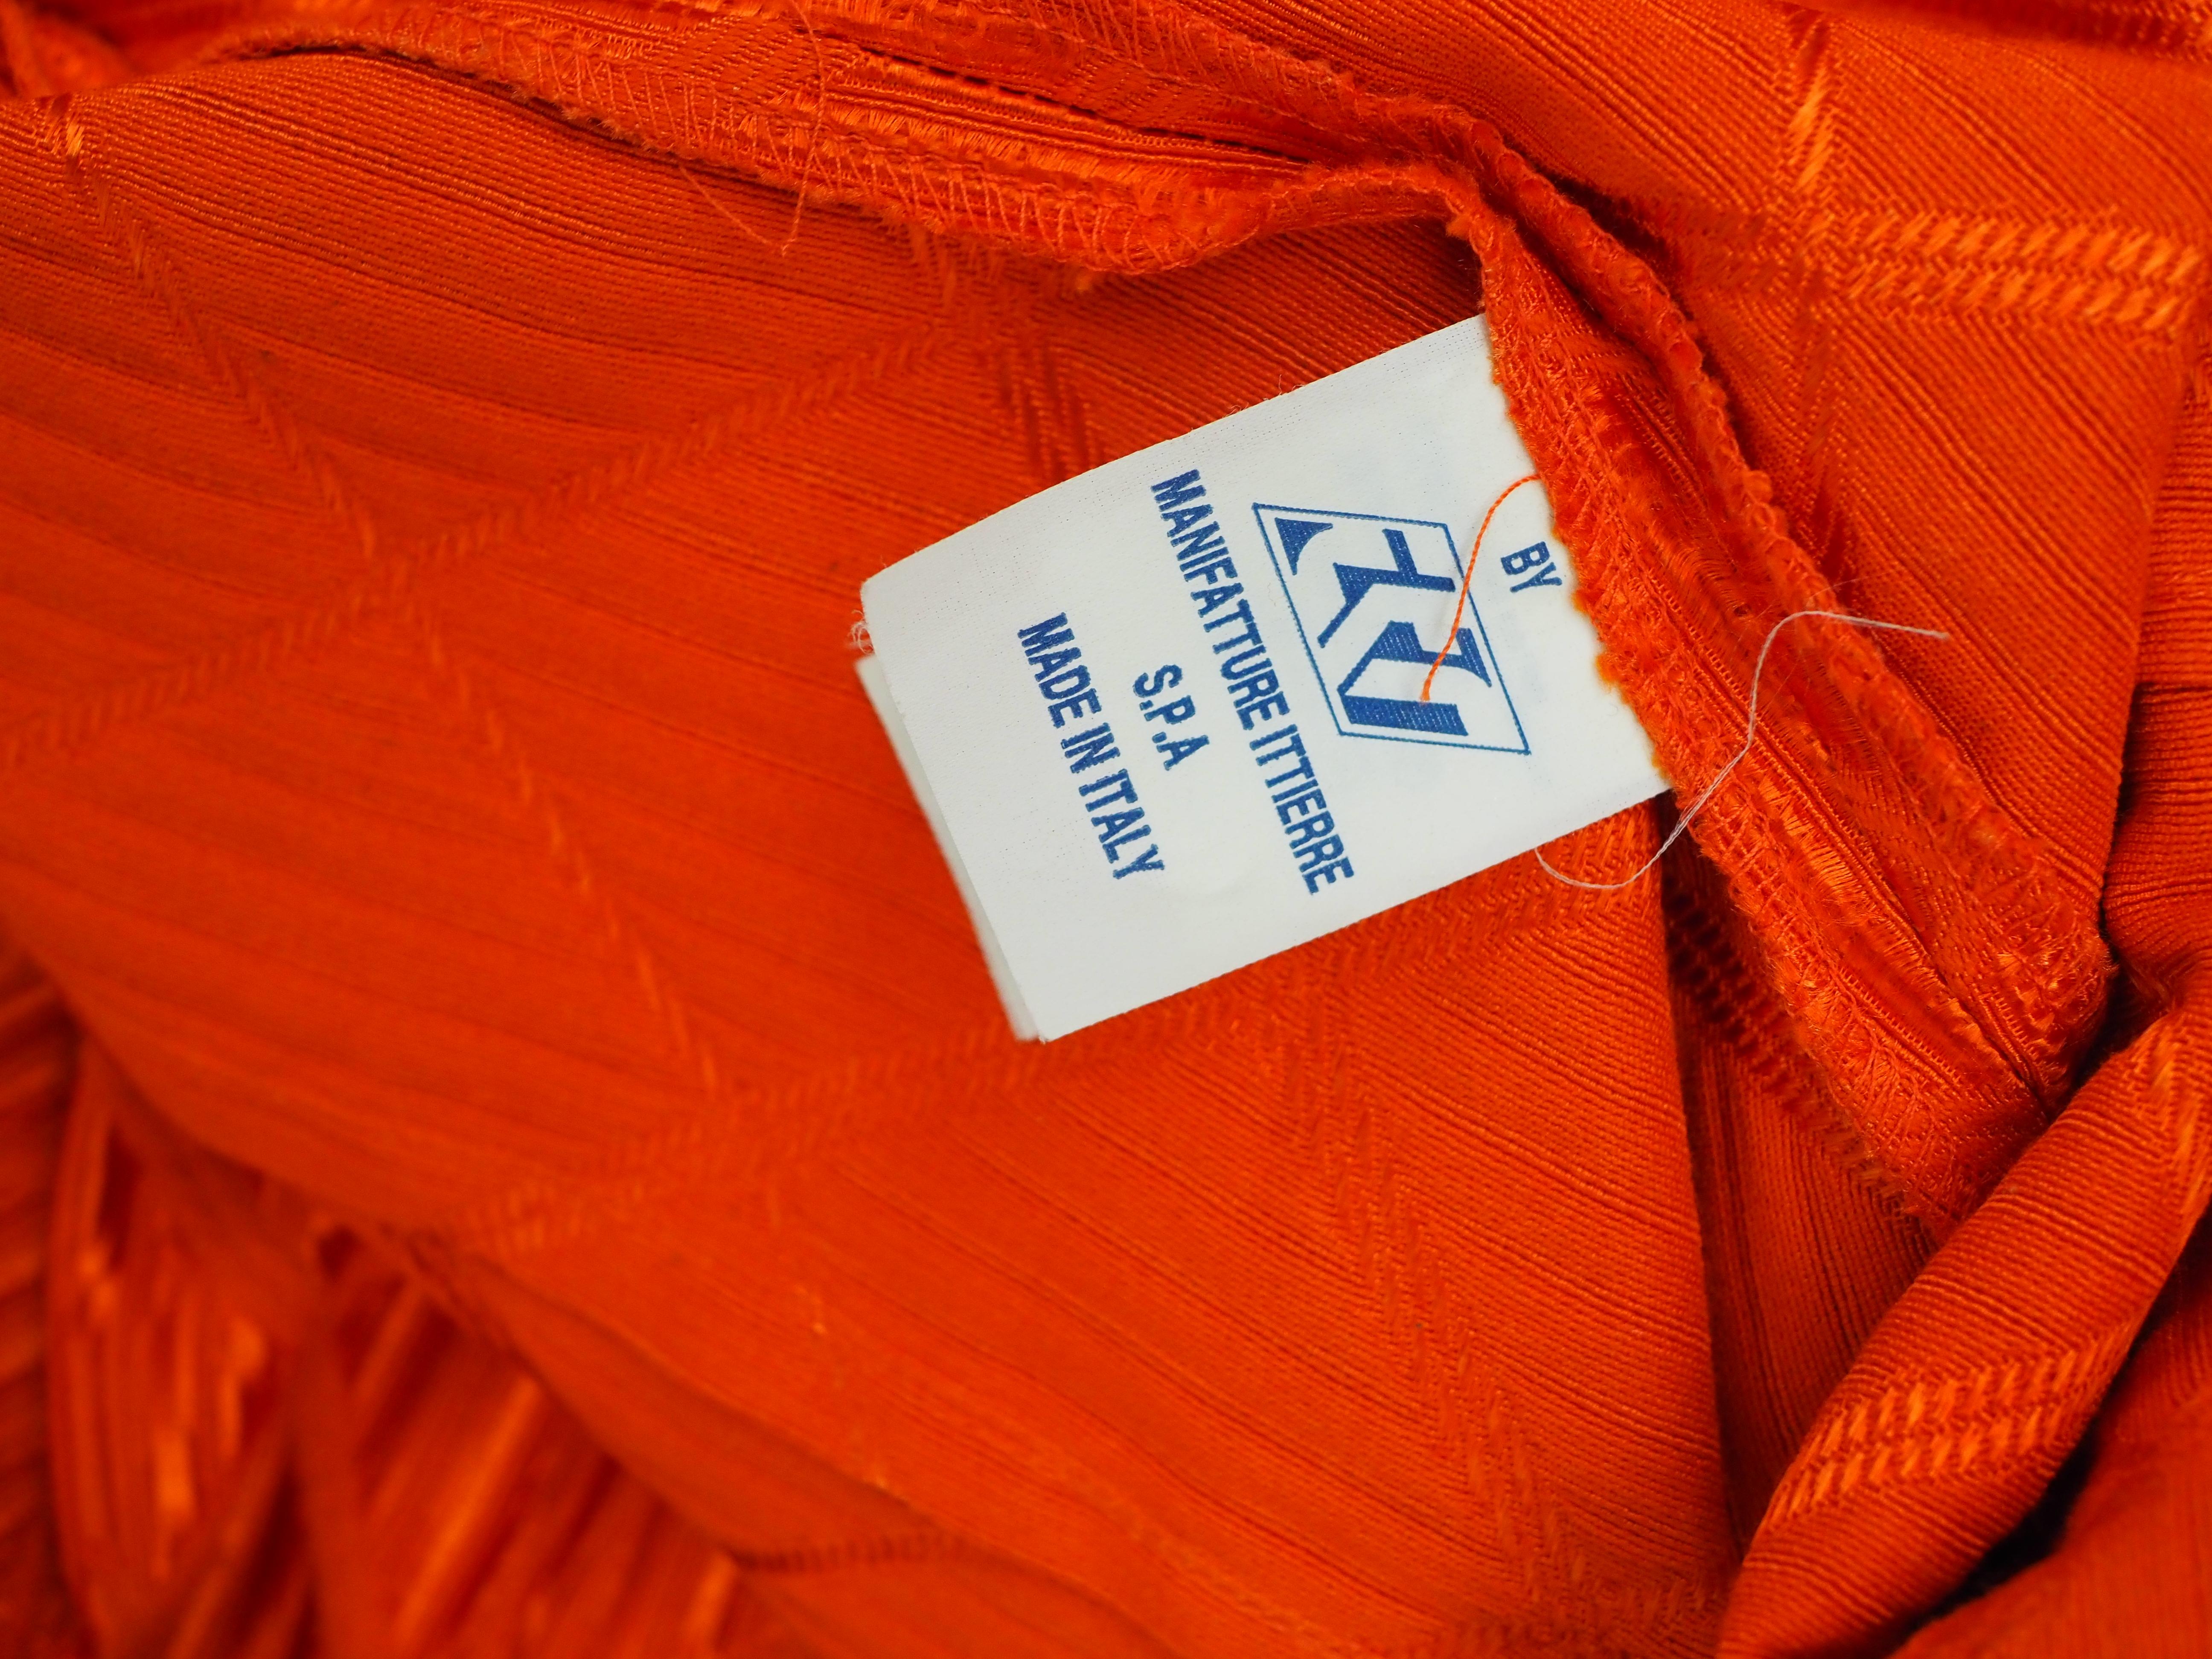 Versus by Gianni Versace orange dress 7